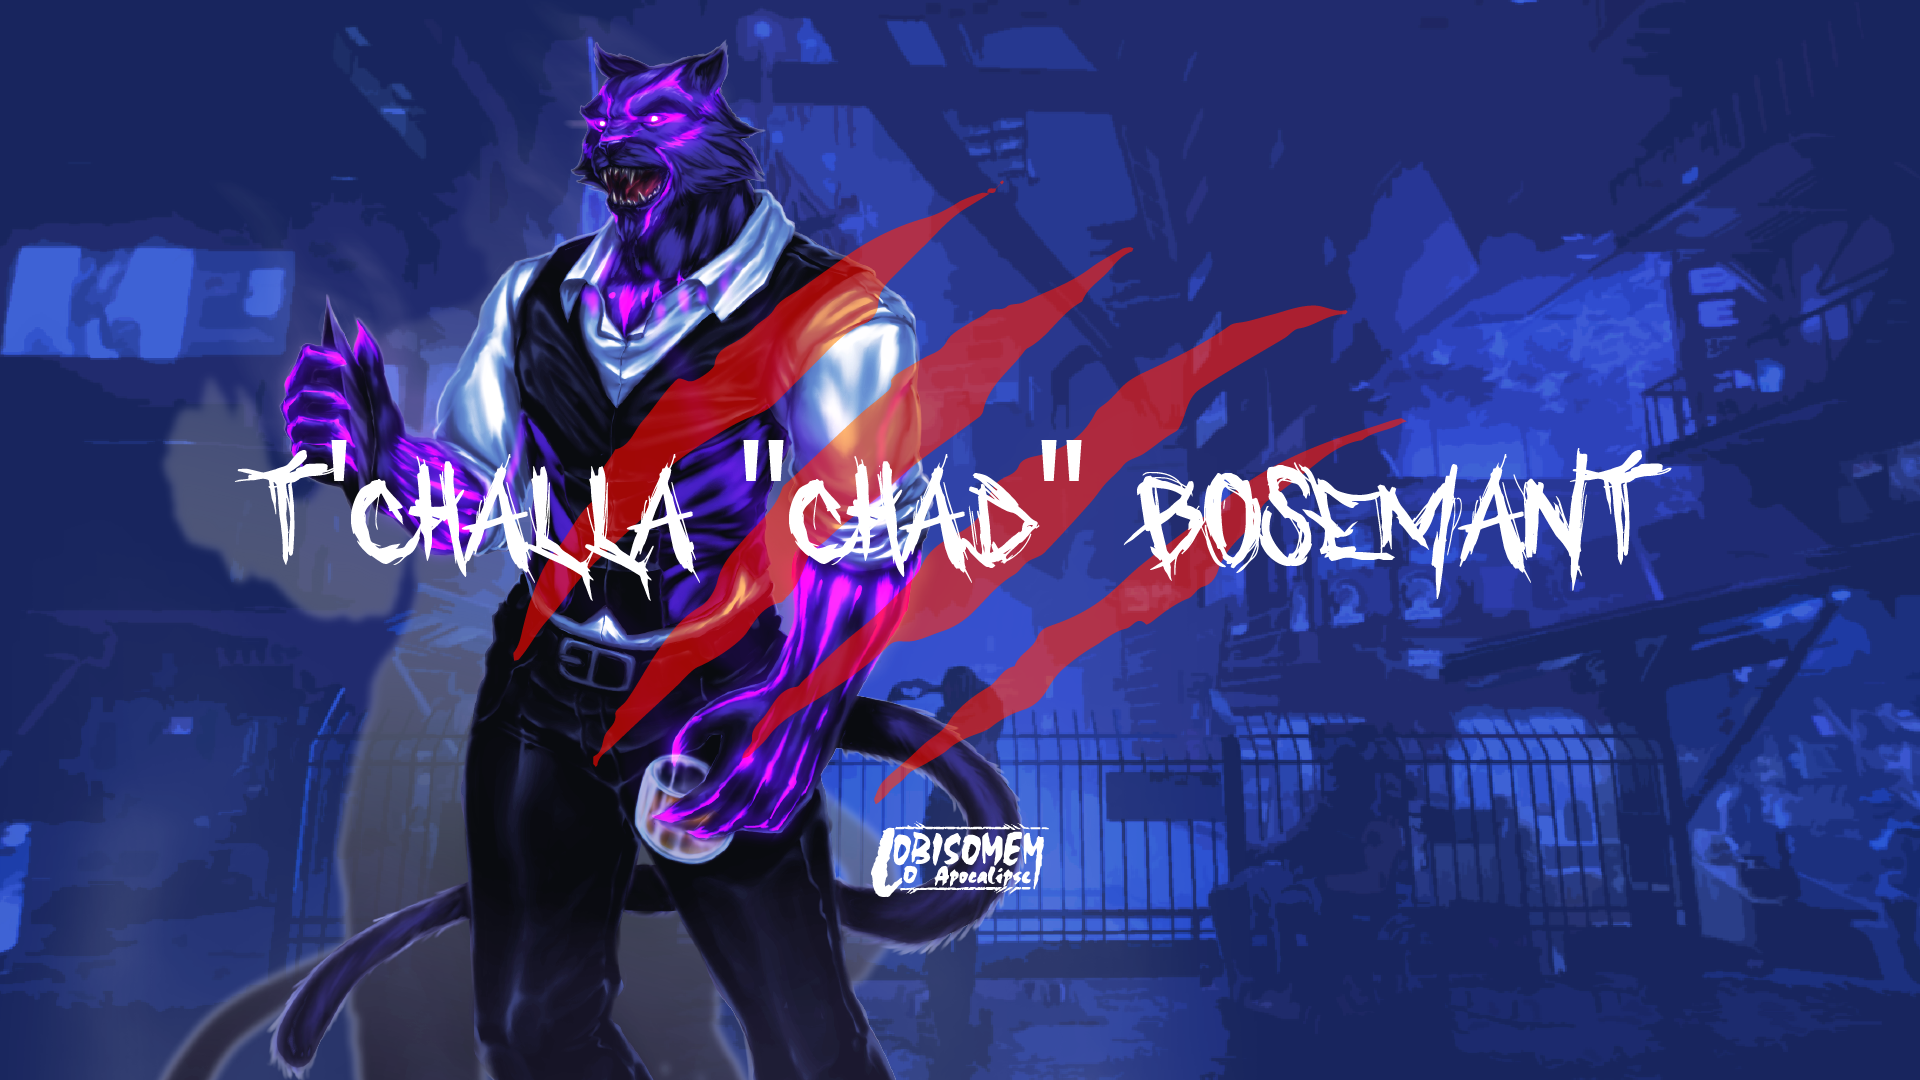 T'challa "Chad" Boseman